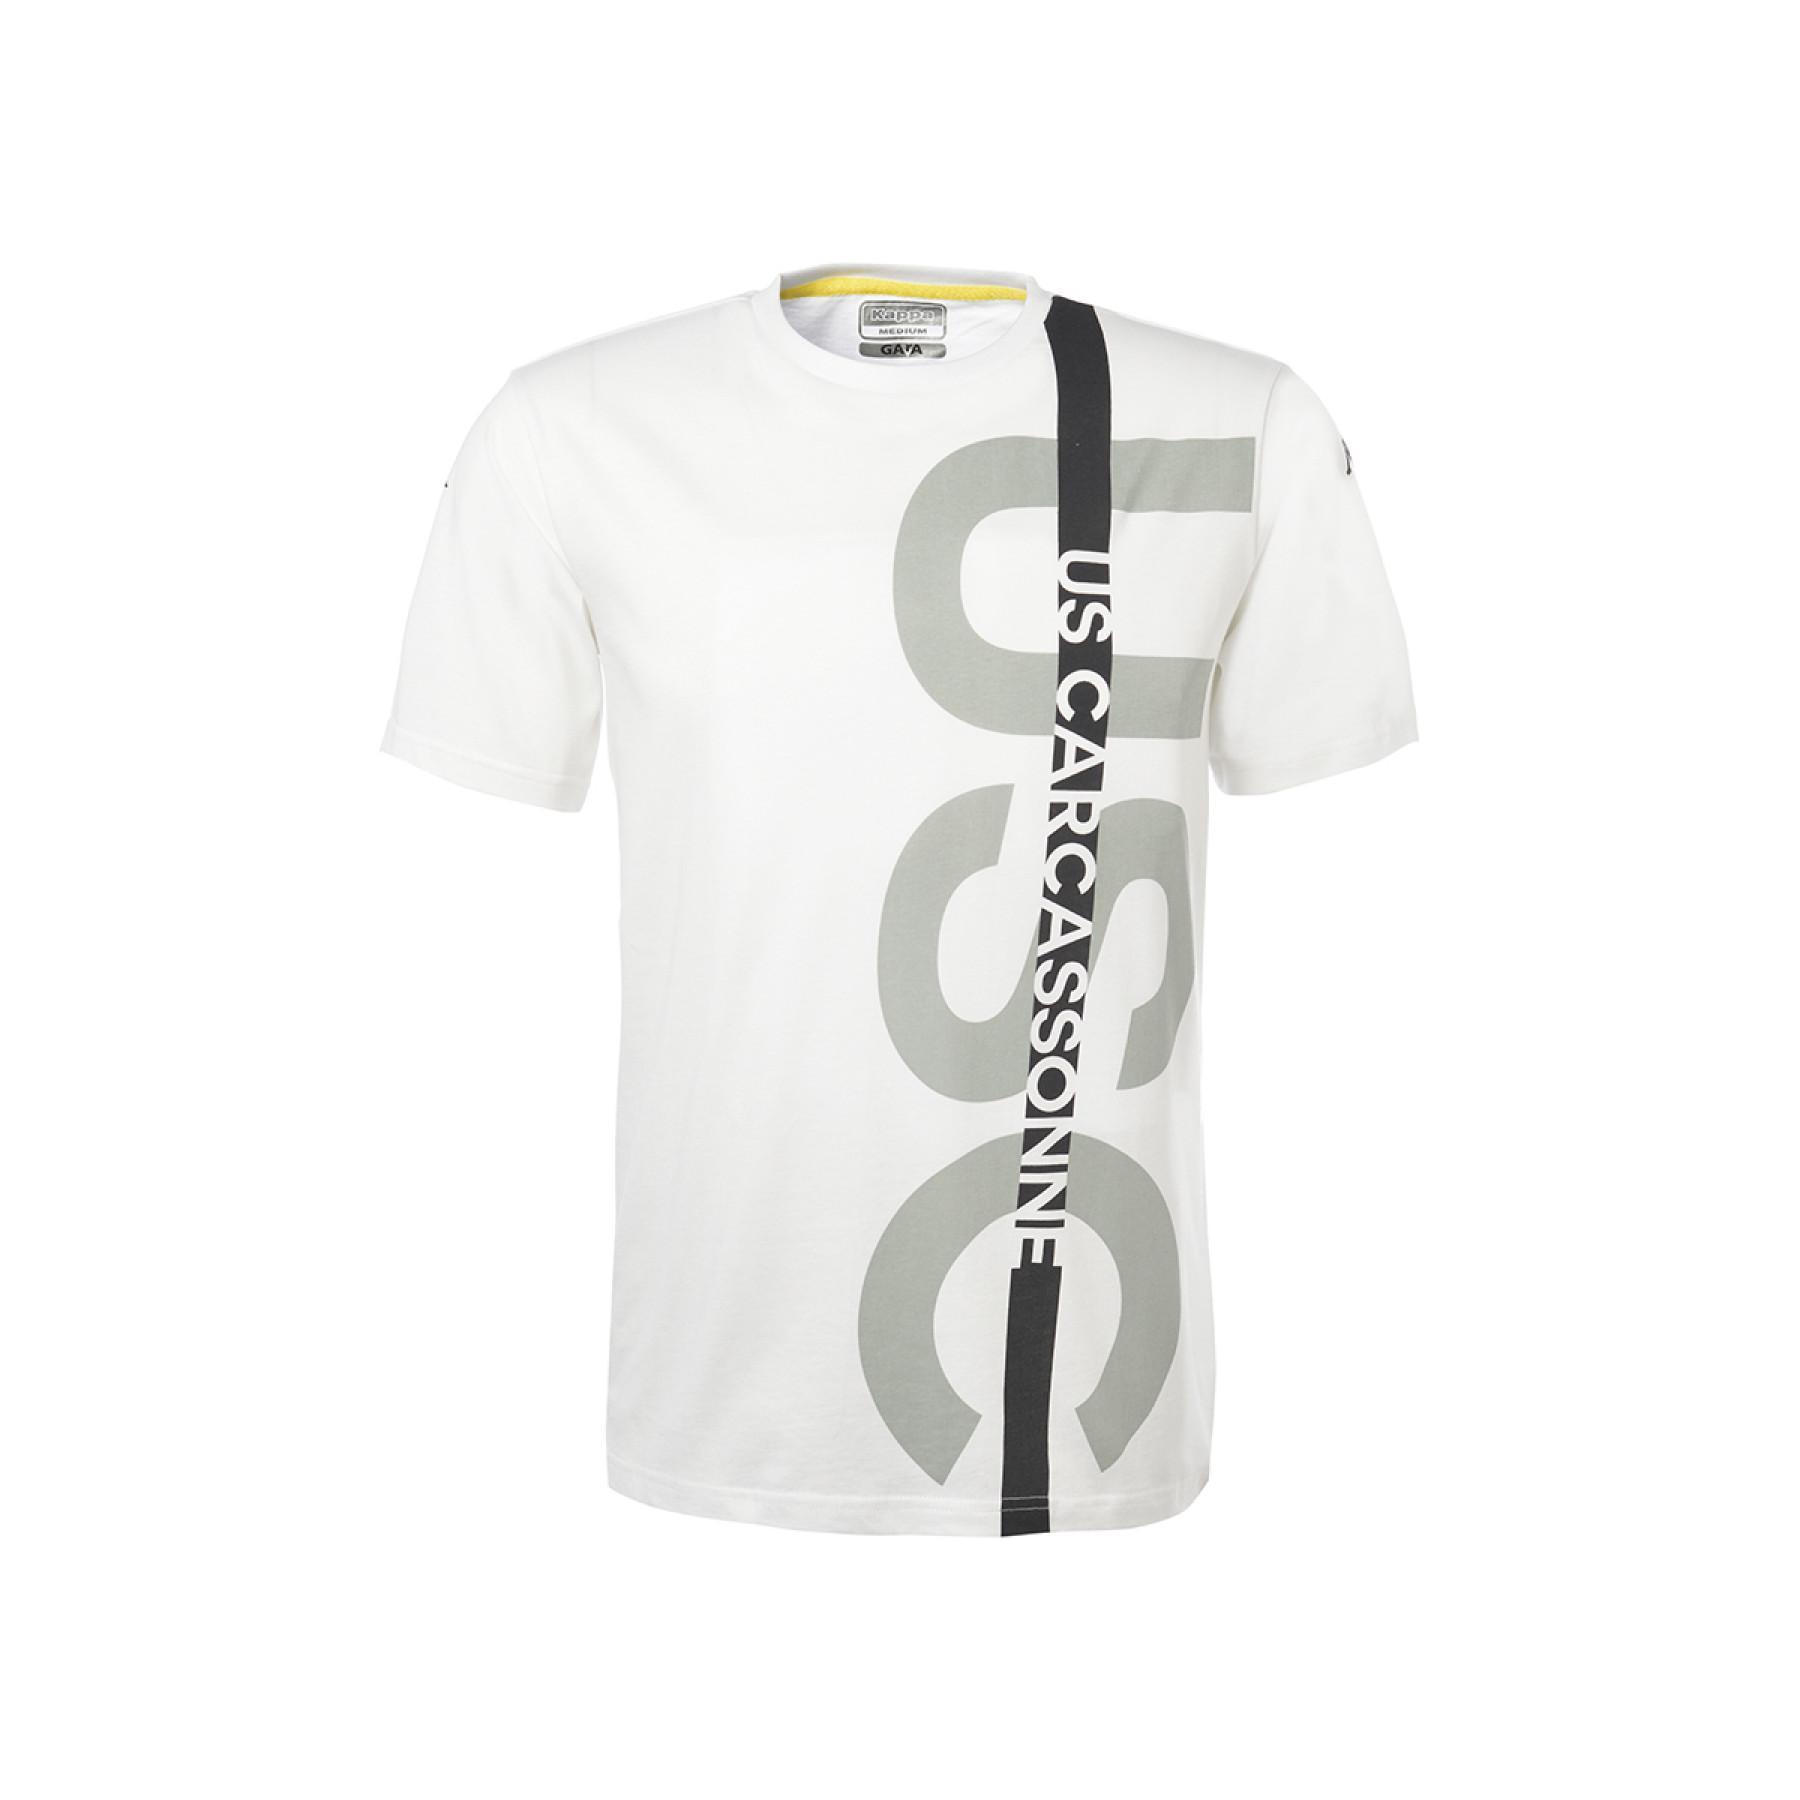 T-shirt vananto US Carcassonne